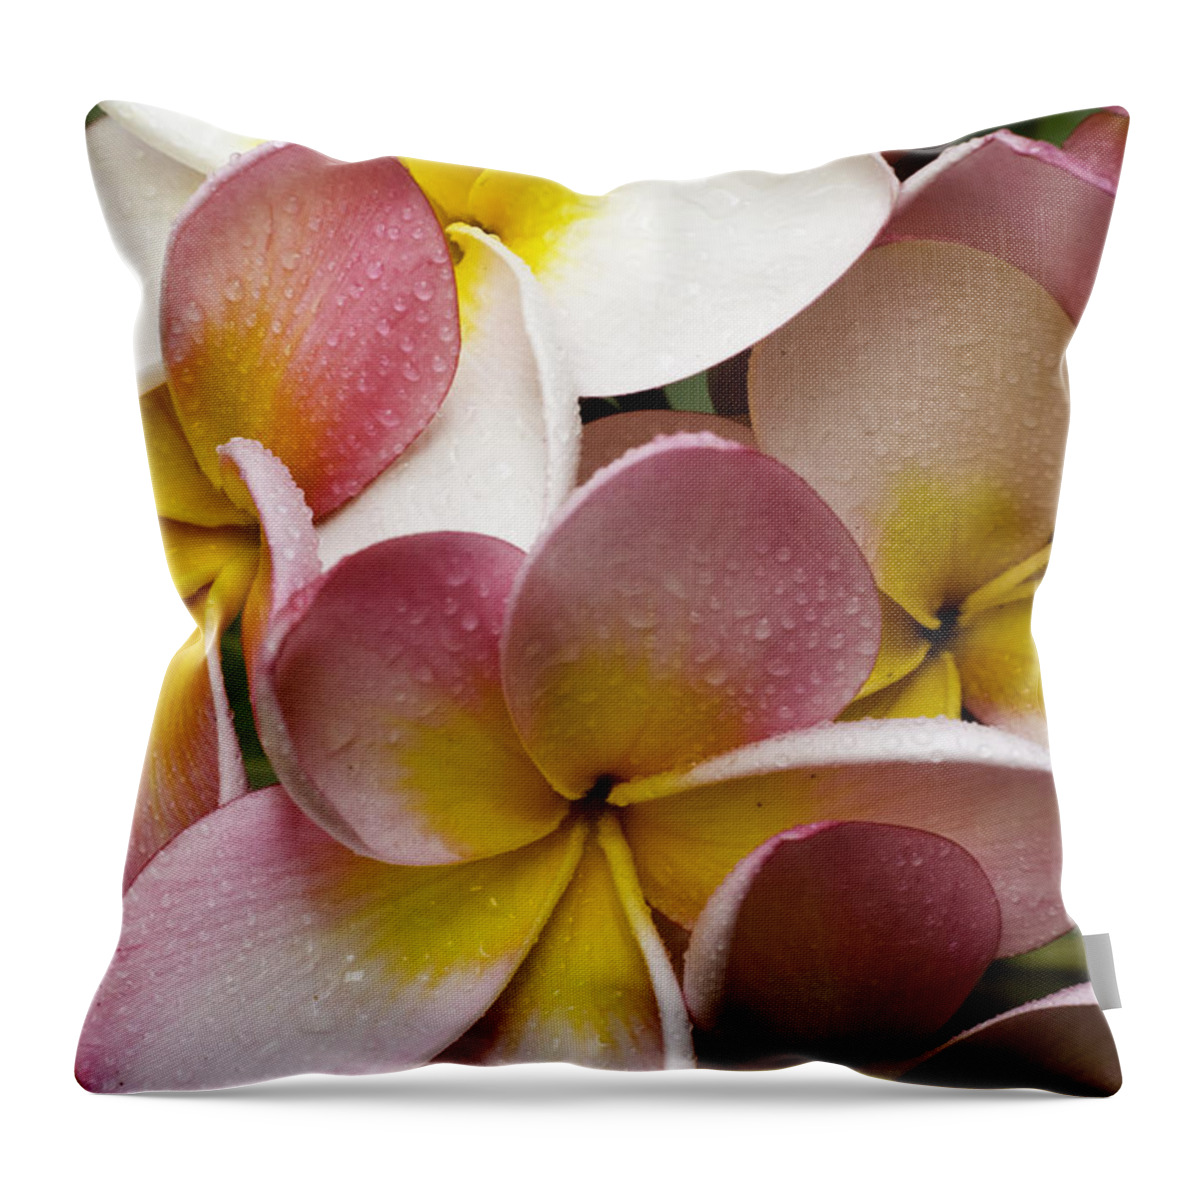 Pink Frangipani Throw Pillow featuring the photograph Pink frangipani by Sheila Smart Fine Art Photography